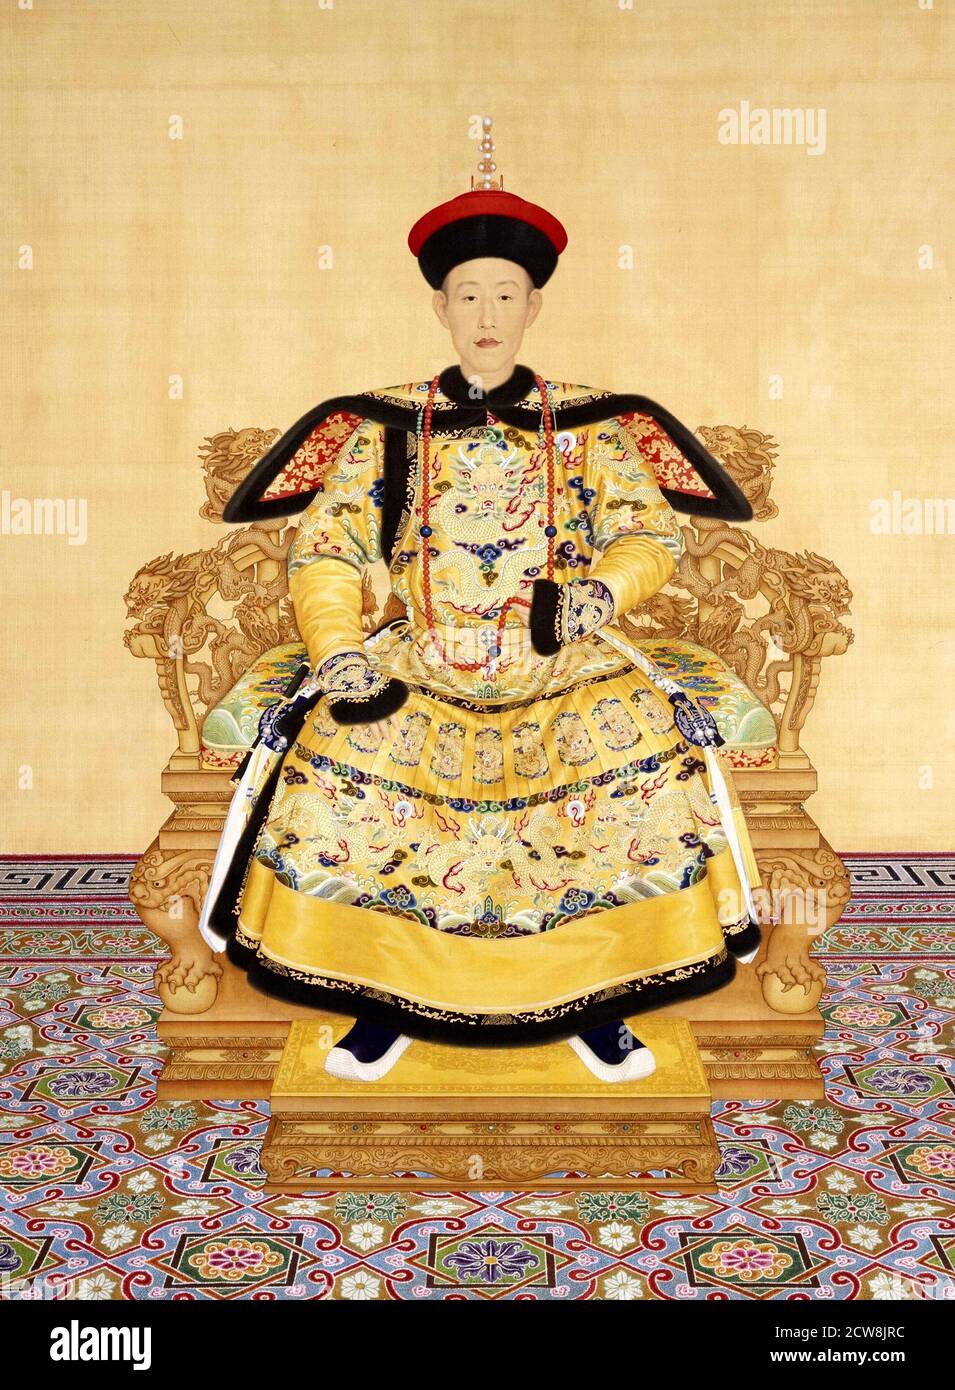 L'imperatore Qianlong in abito da corte di Giuseppe Castiglione (1688-1766, nome cinese Lang Shining), 1736. L'imperatore Qianlong (1711-1799) fu il sesto imperatore della dinastia Qing in Cina Foto Stock